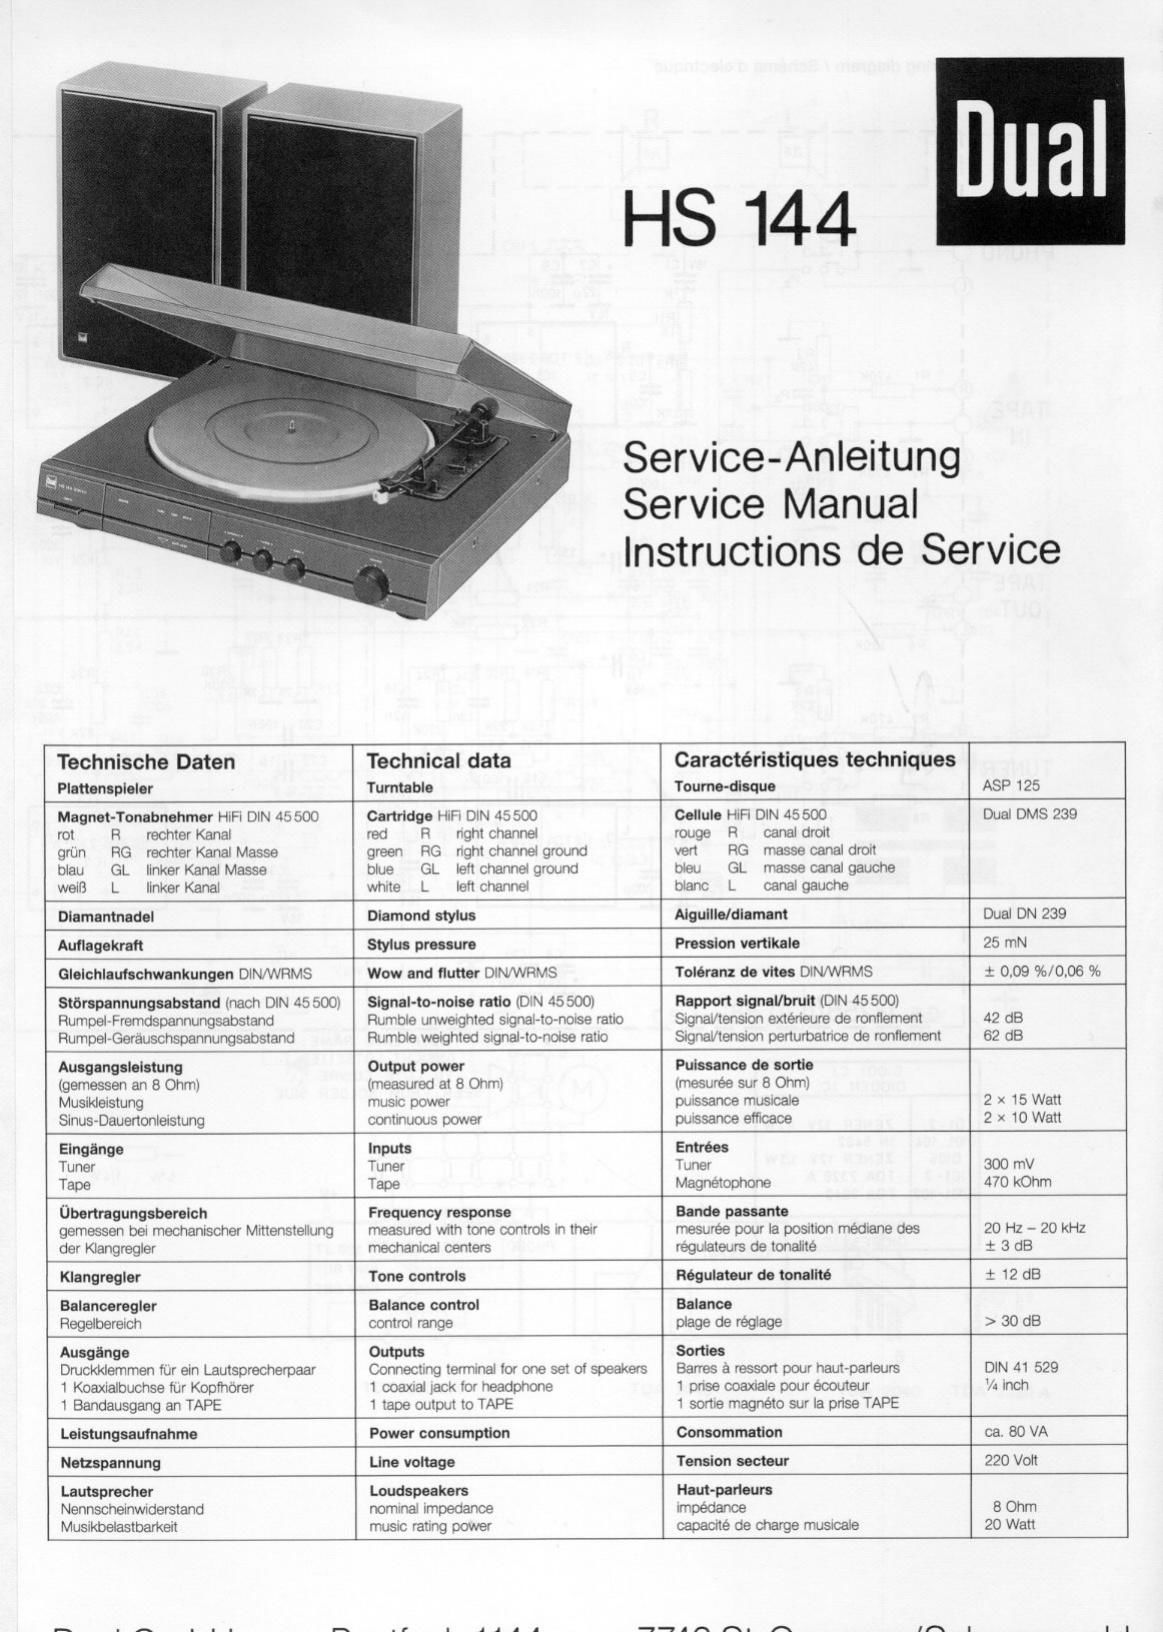 Dual HS 144 Service Manual